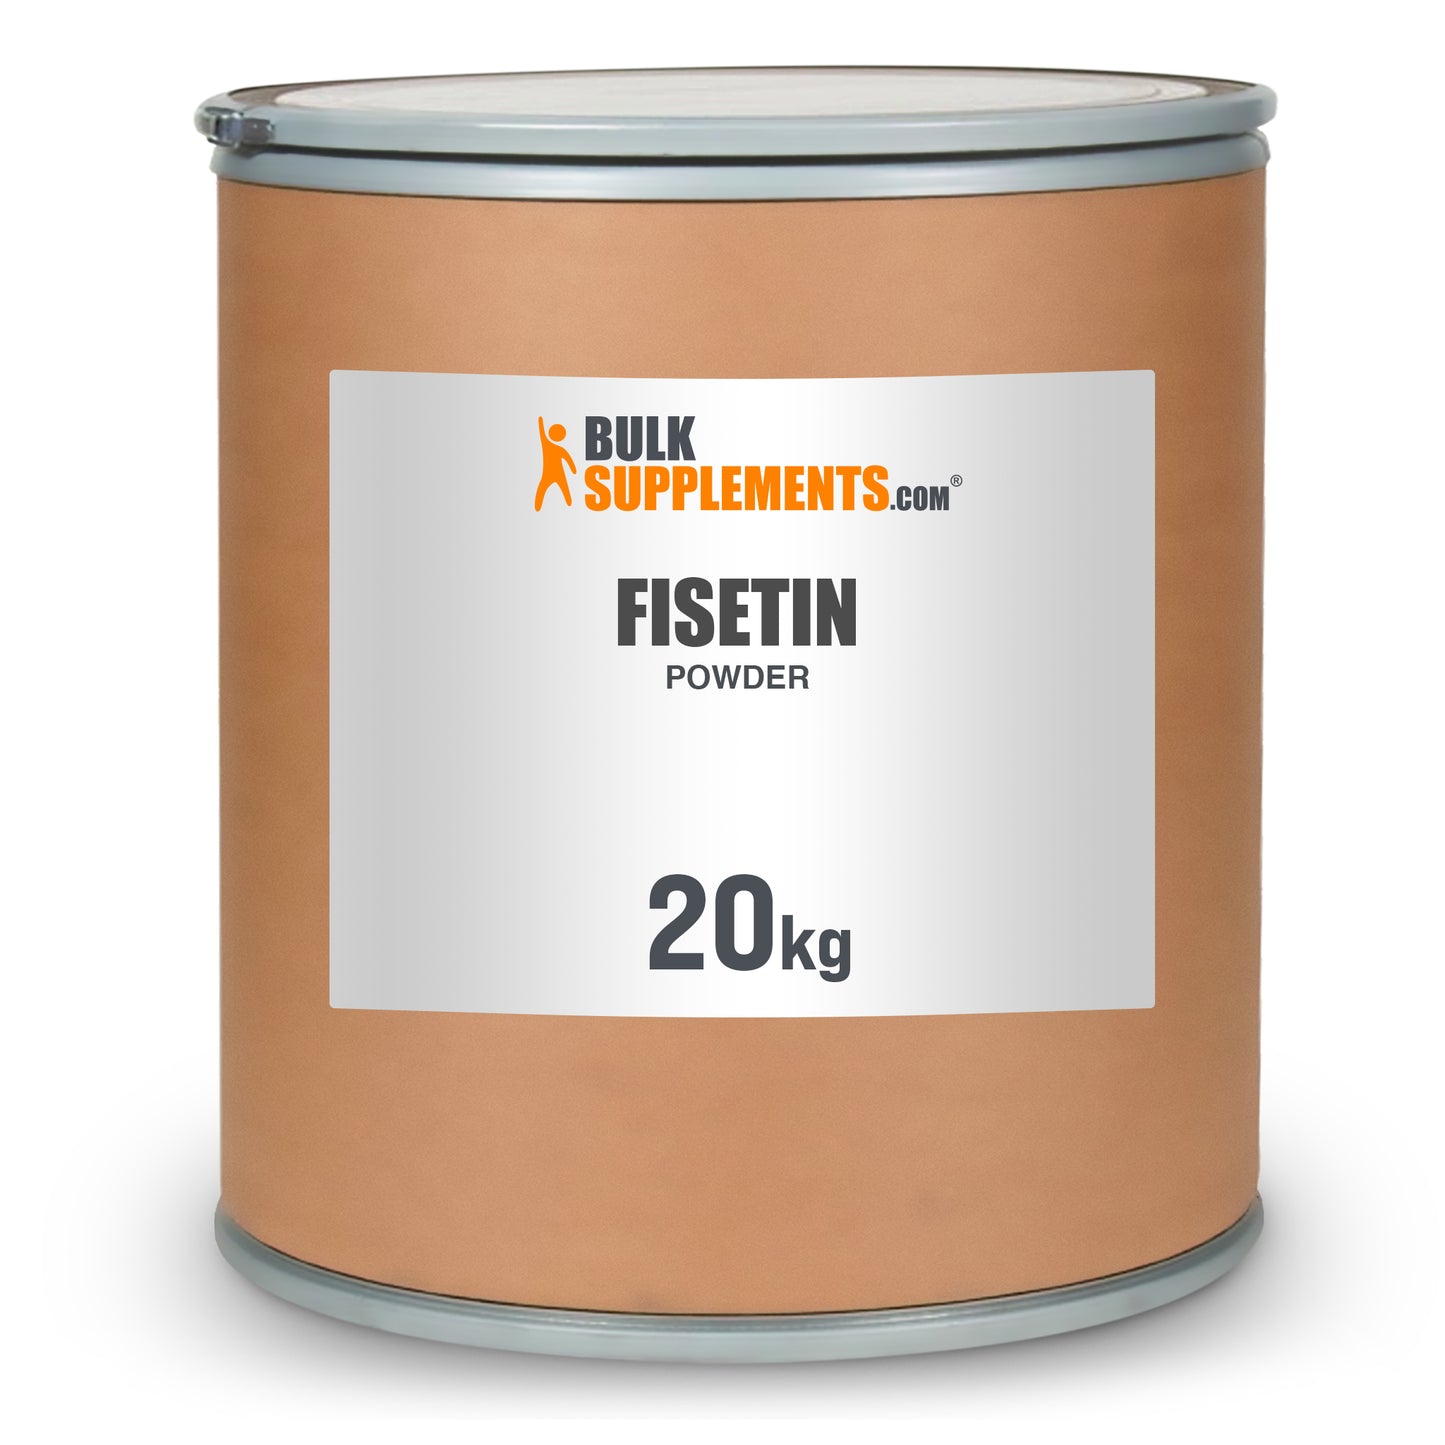 Fisetin Powder 20kg barrel image